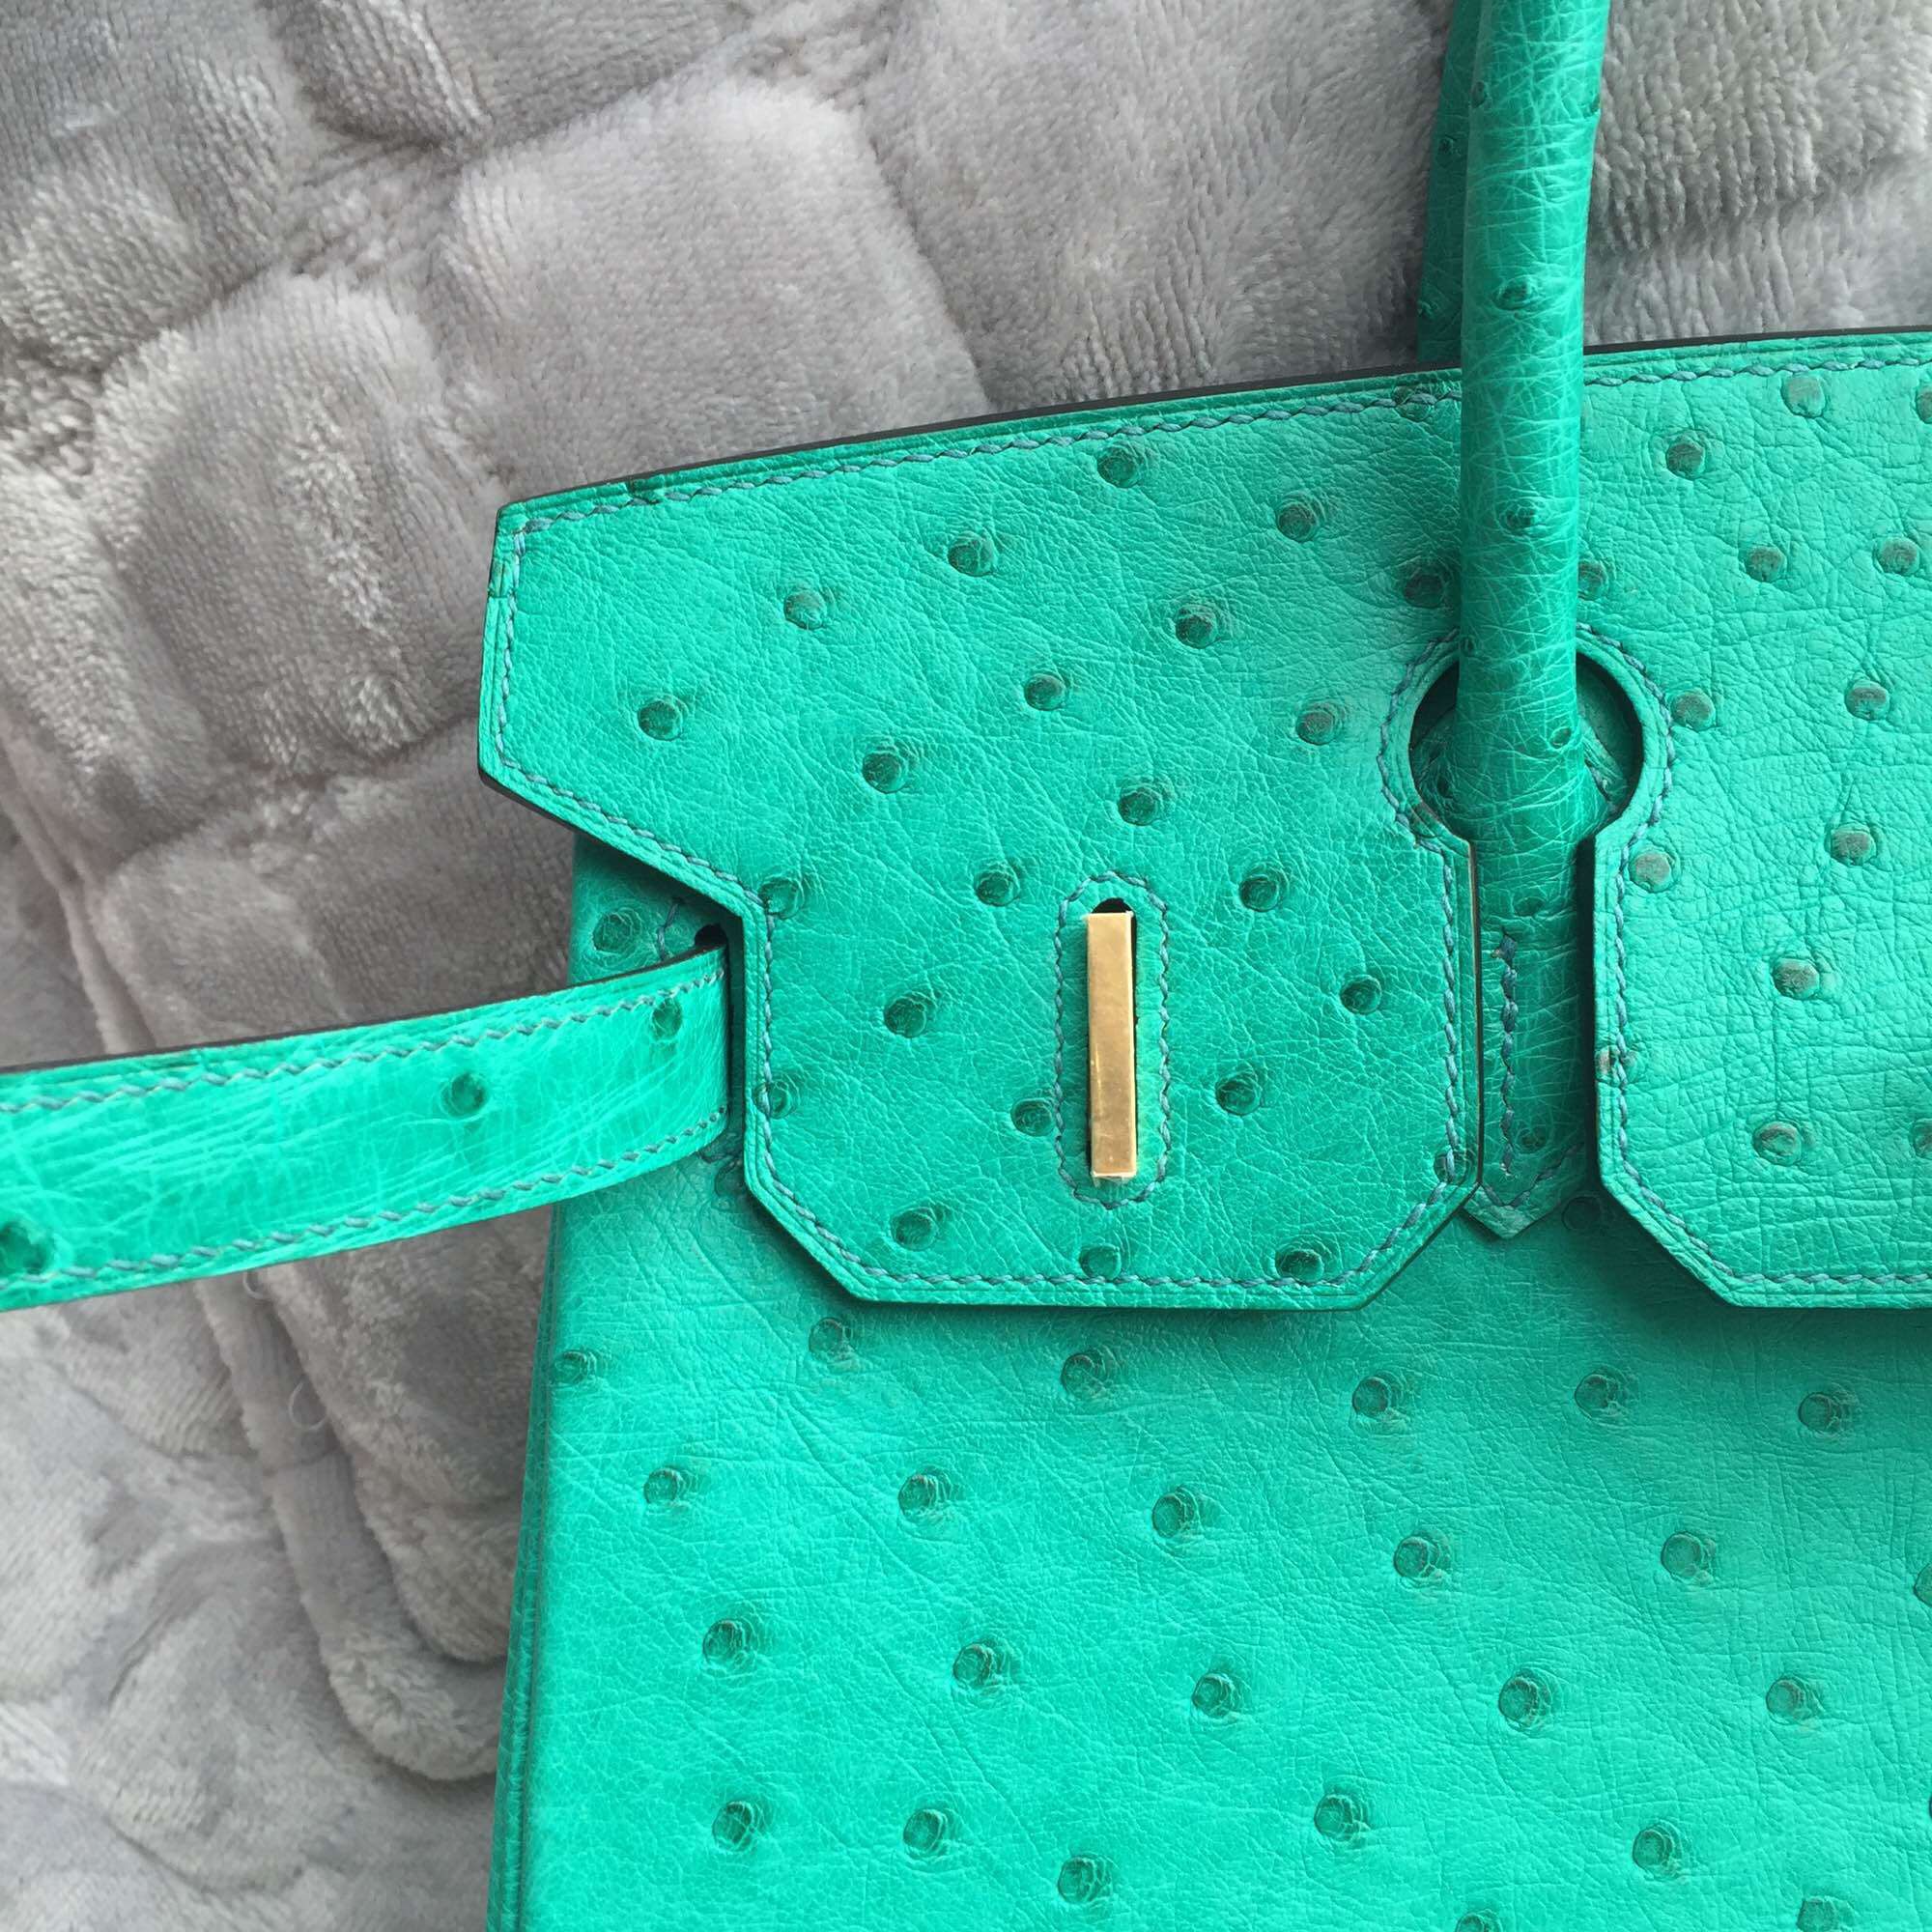 6Q Emerald Green Ostrich Leather Hermes Birkin Bag 30CM Gold Hardware